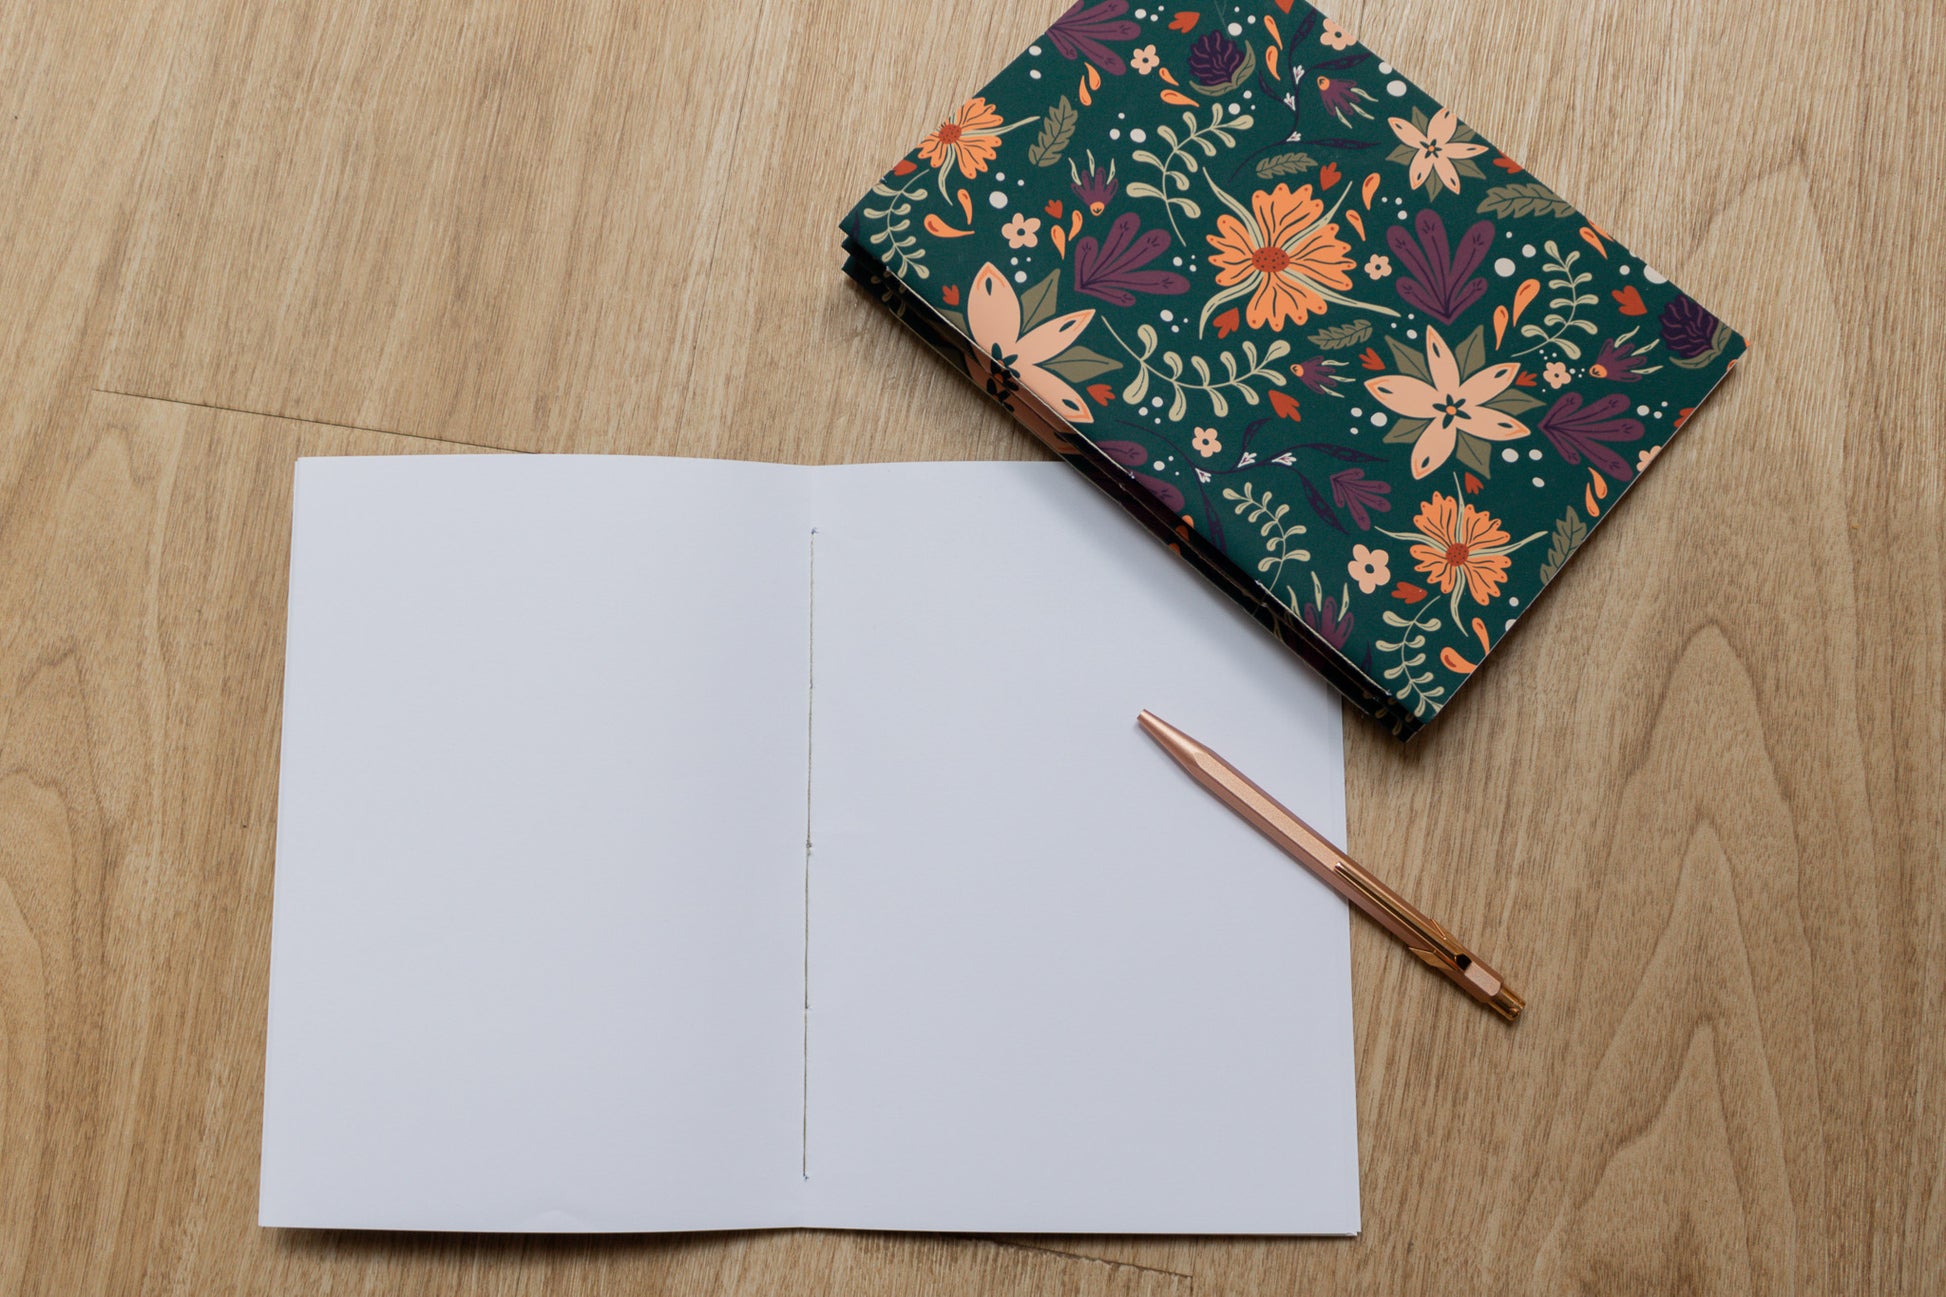 Handmade A5 notebook with autumnal floral design by MellowApricotStudio & KreativWerkstatt24 - blank inner